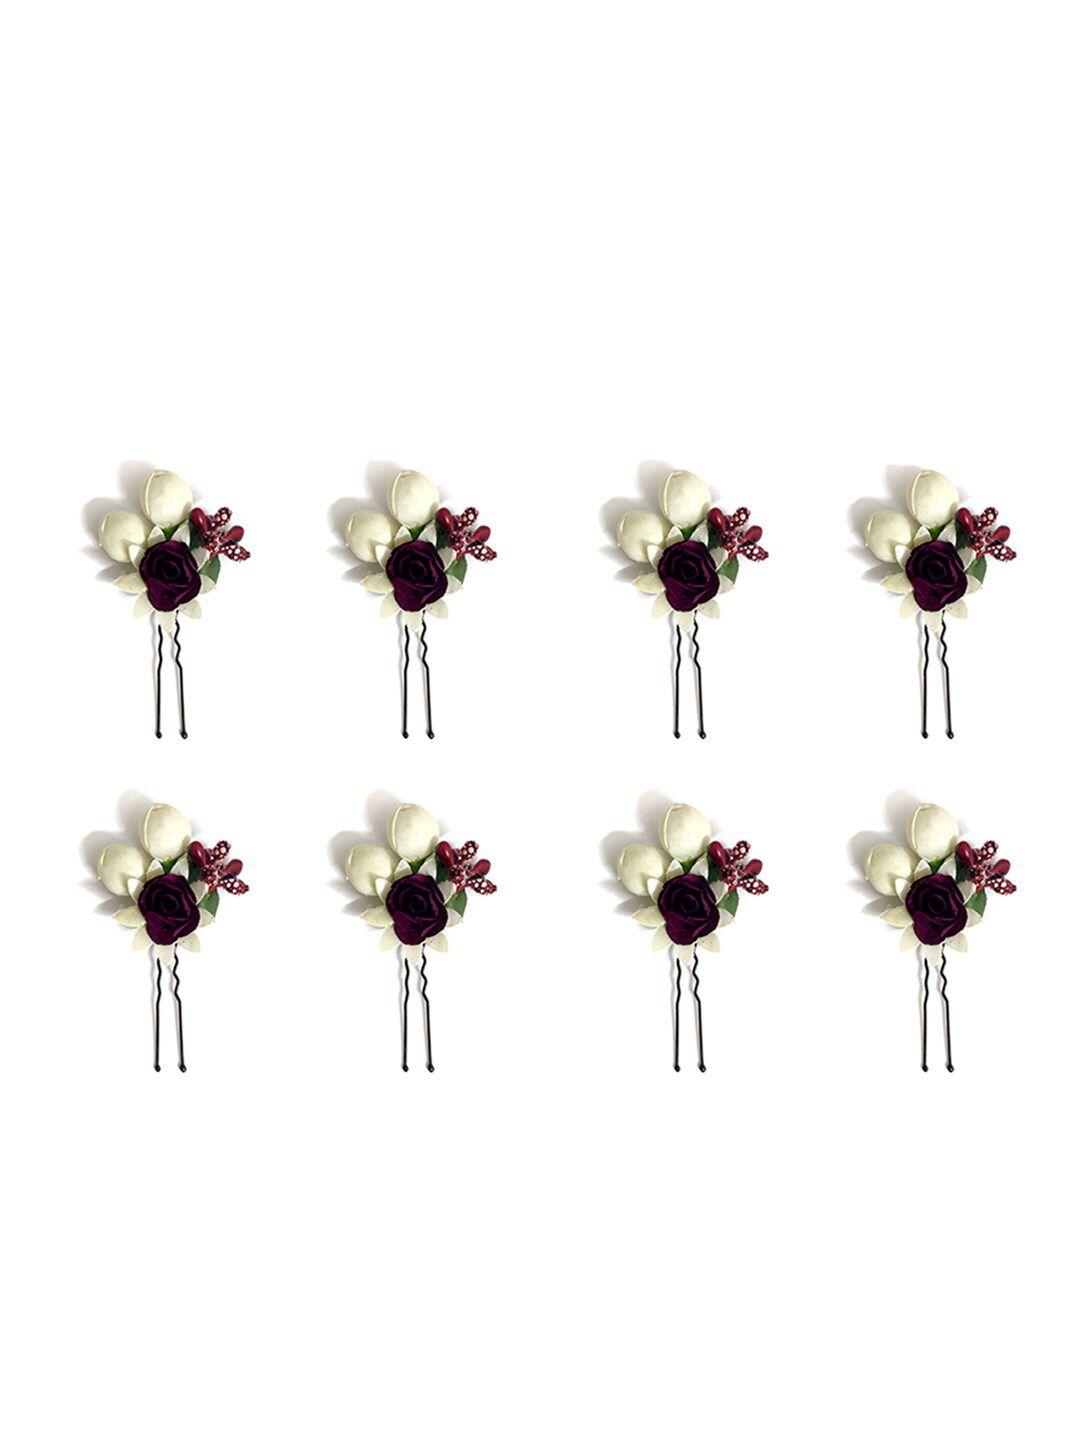 hair flare women set of 8 artificial small rose flower hair u pin